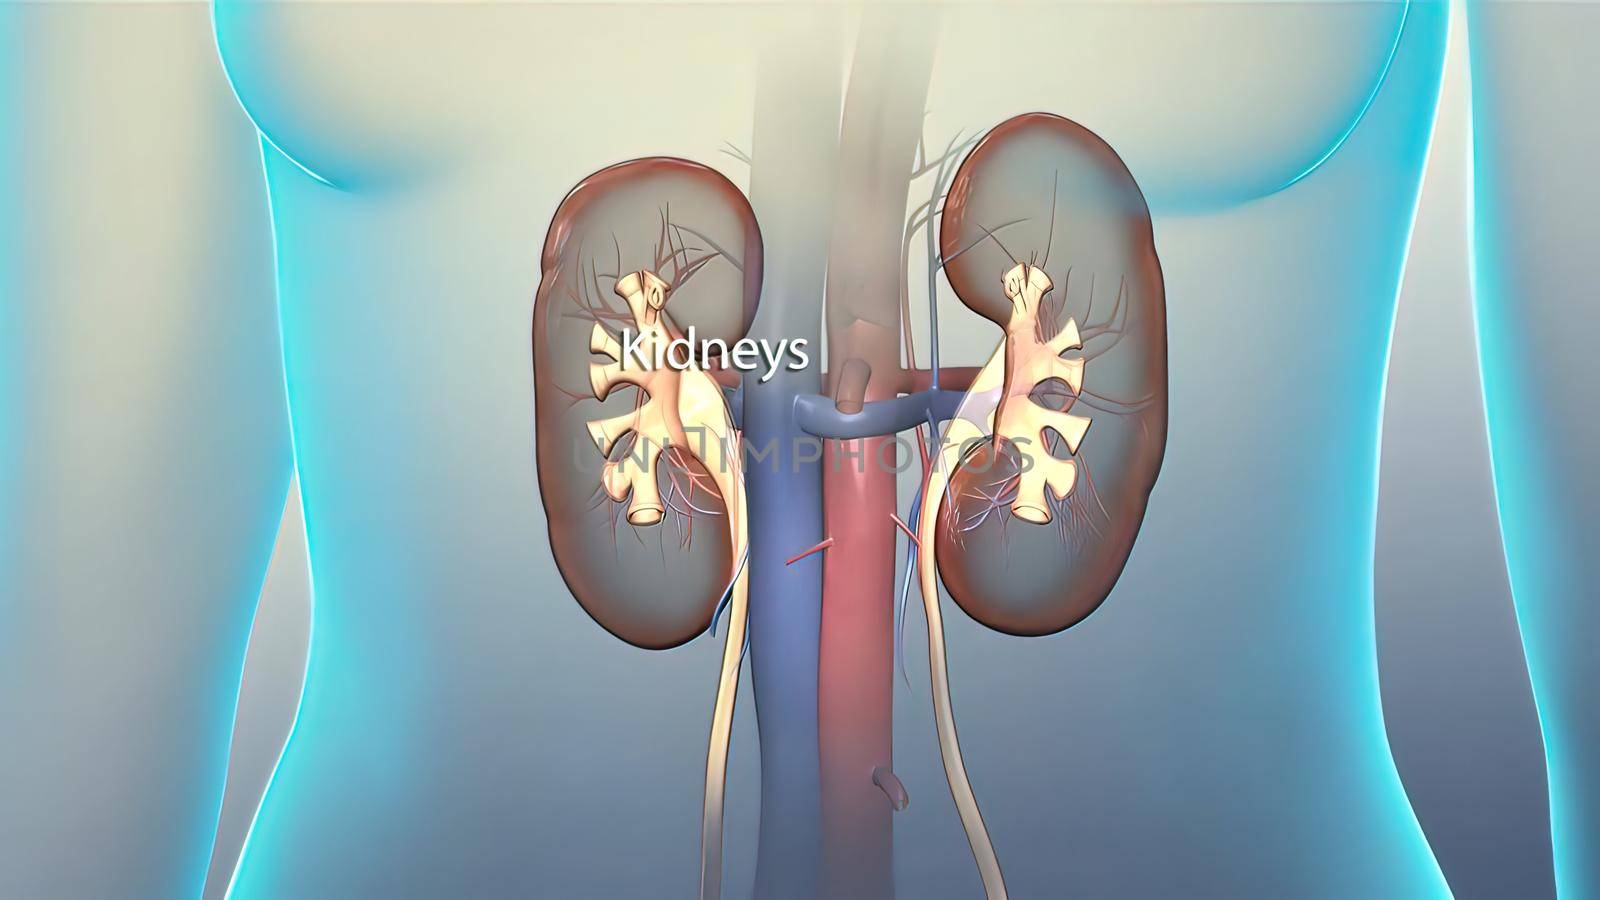 human anatomy showing kidney organ by creativepic